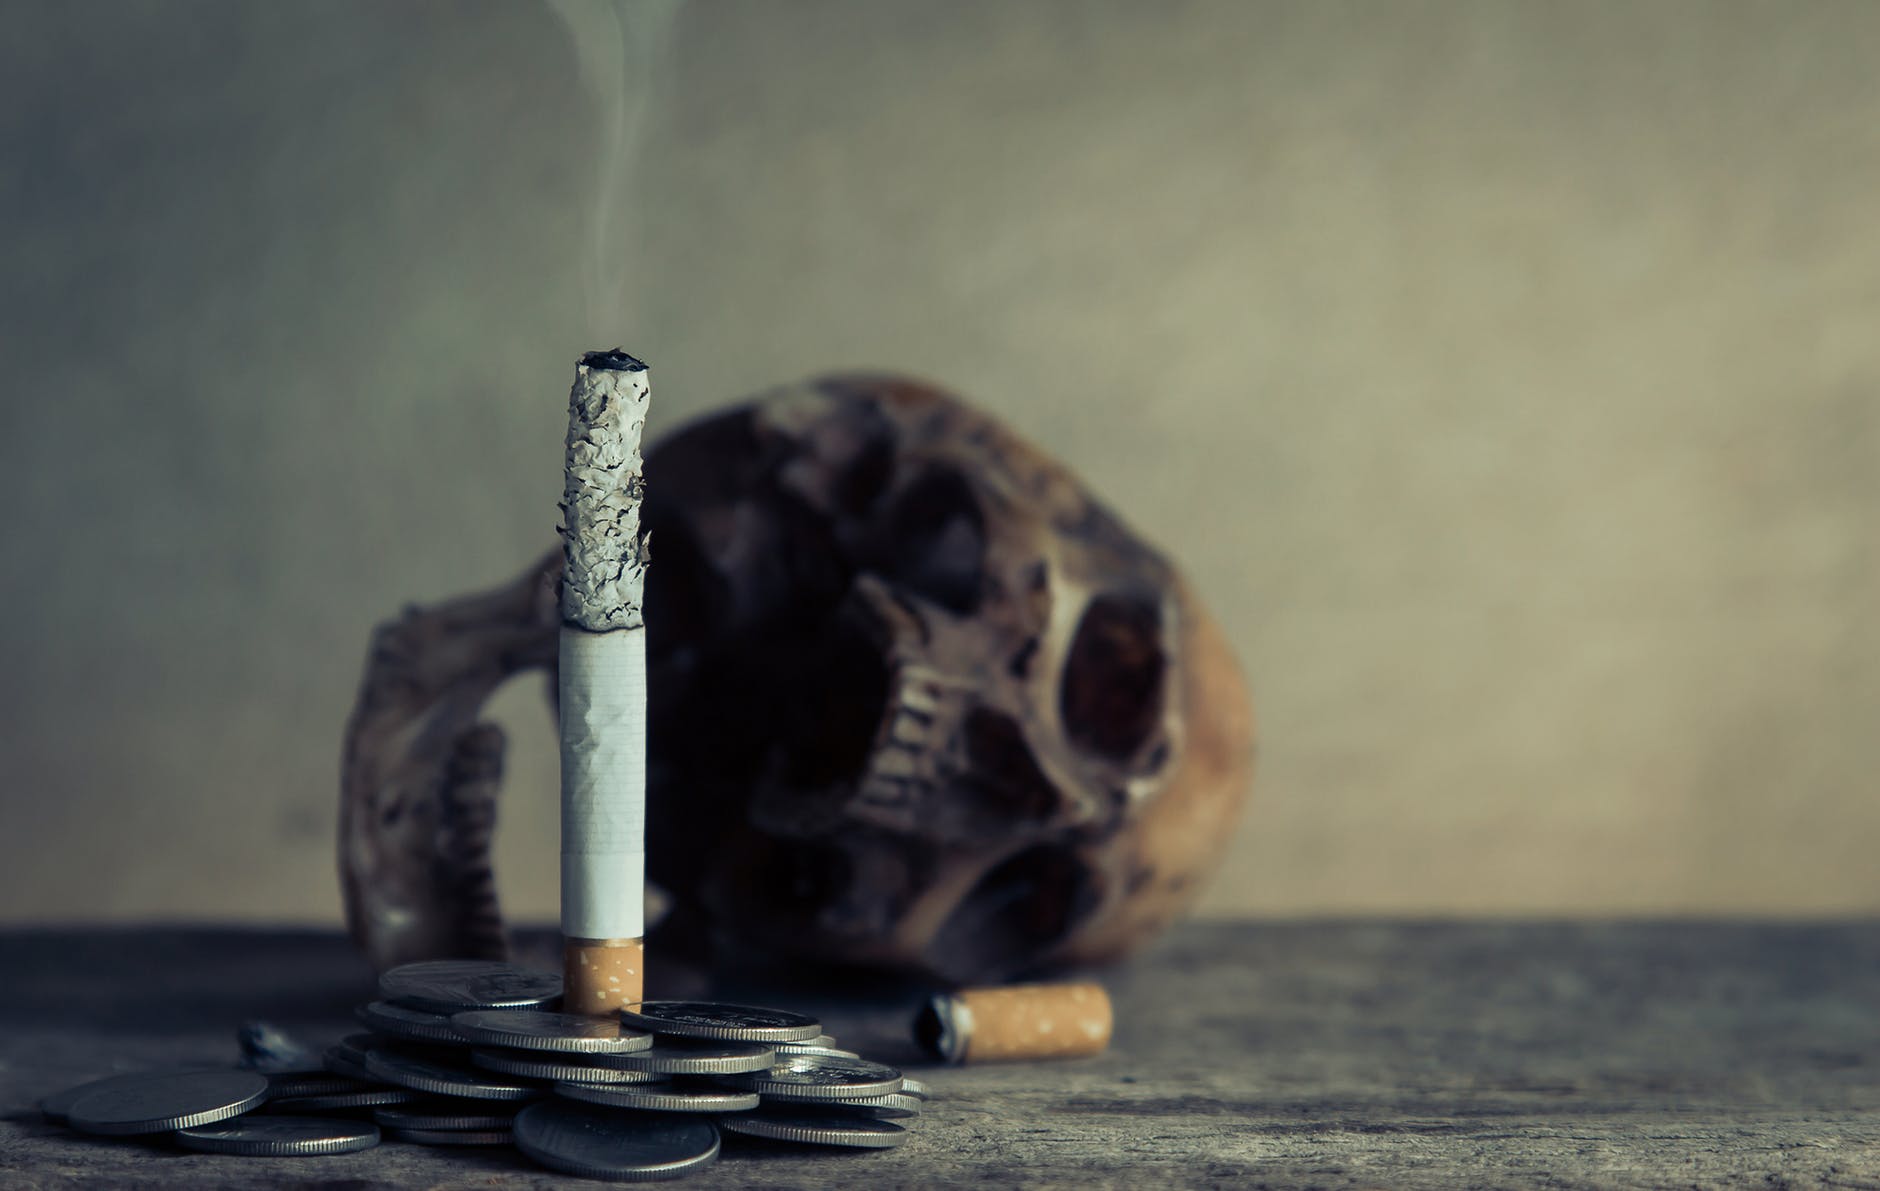 Smoking ruining life feature image